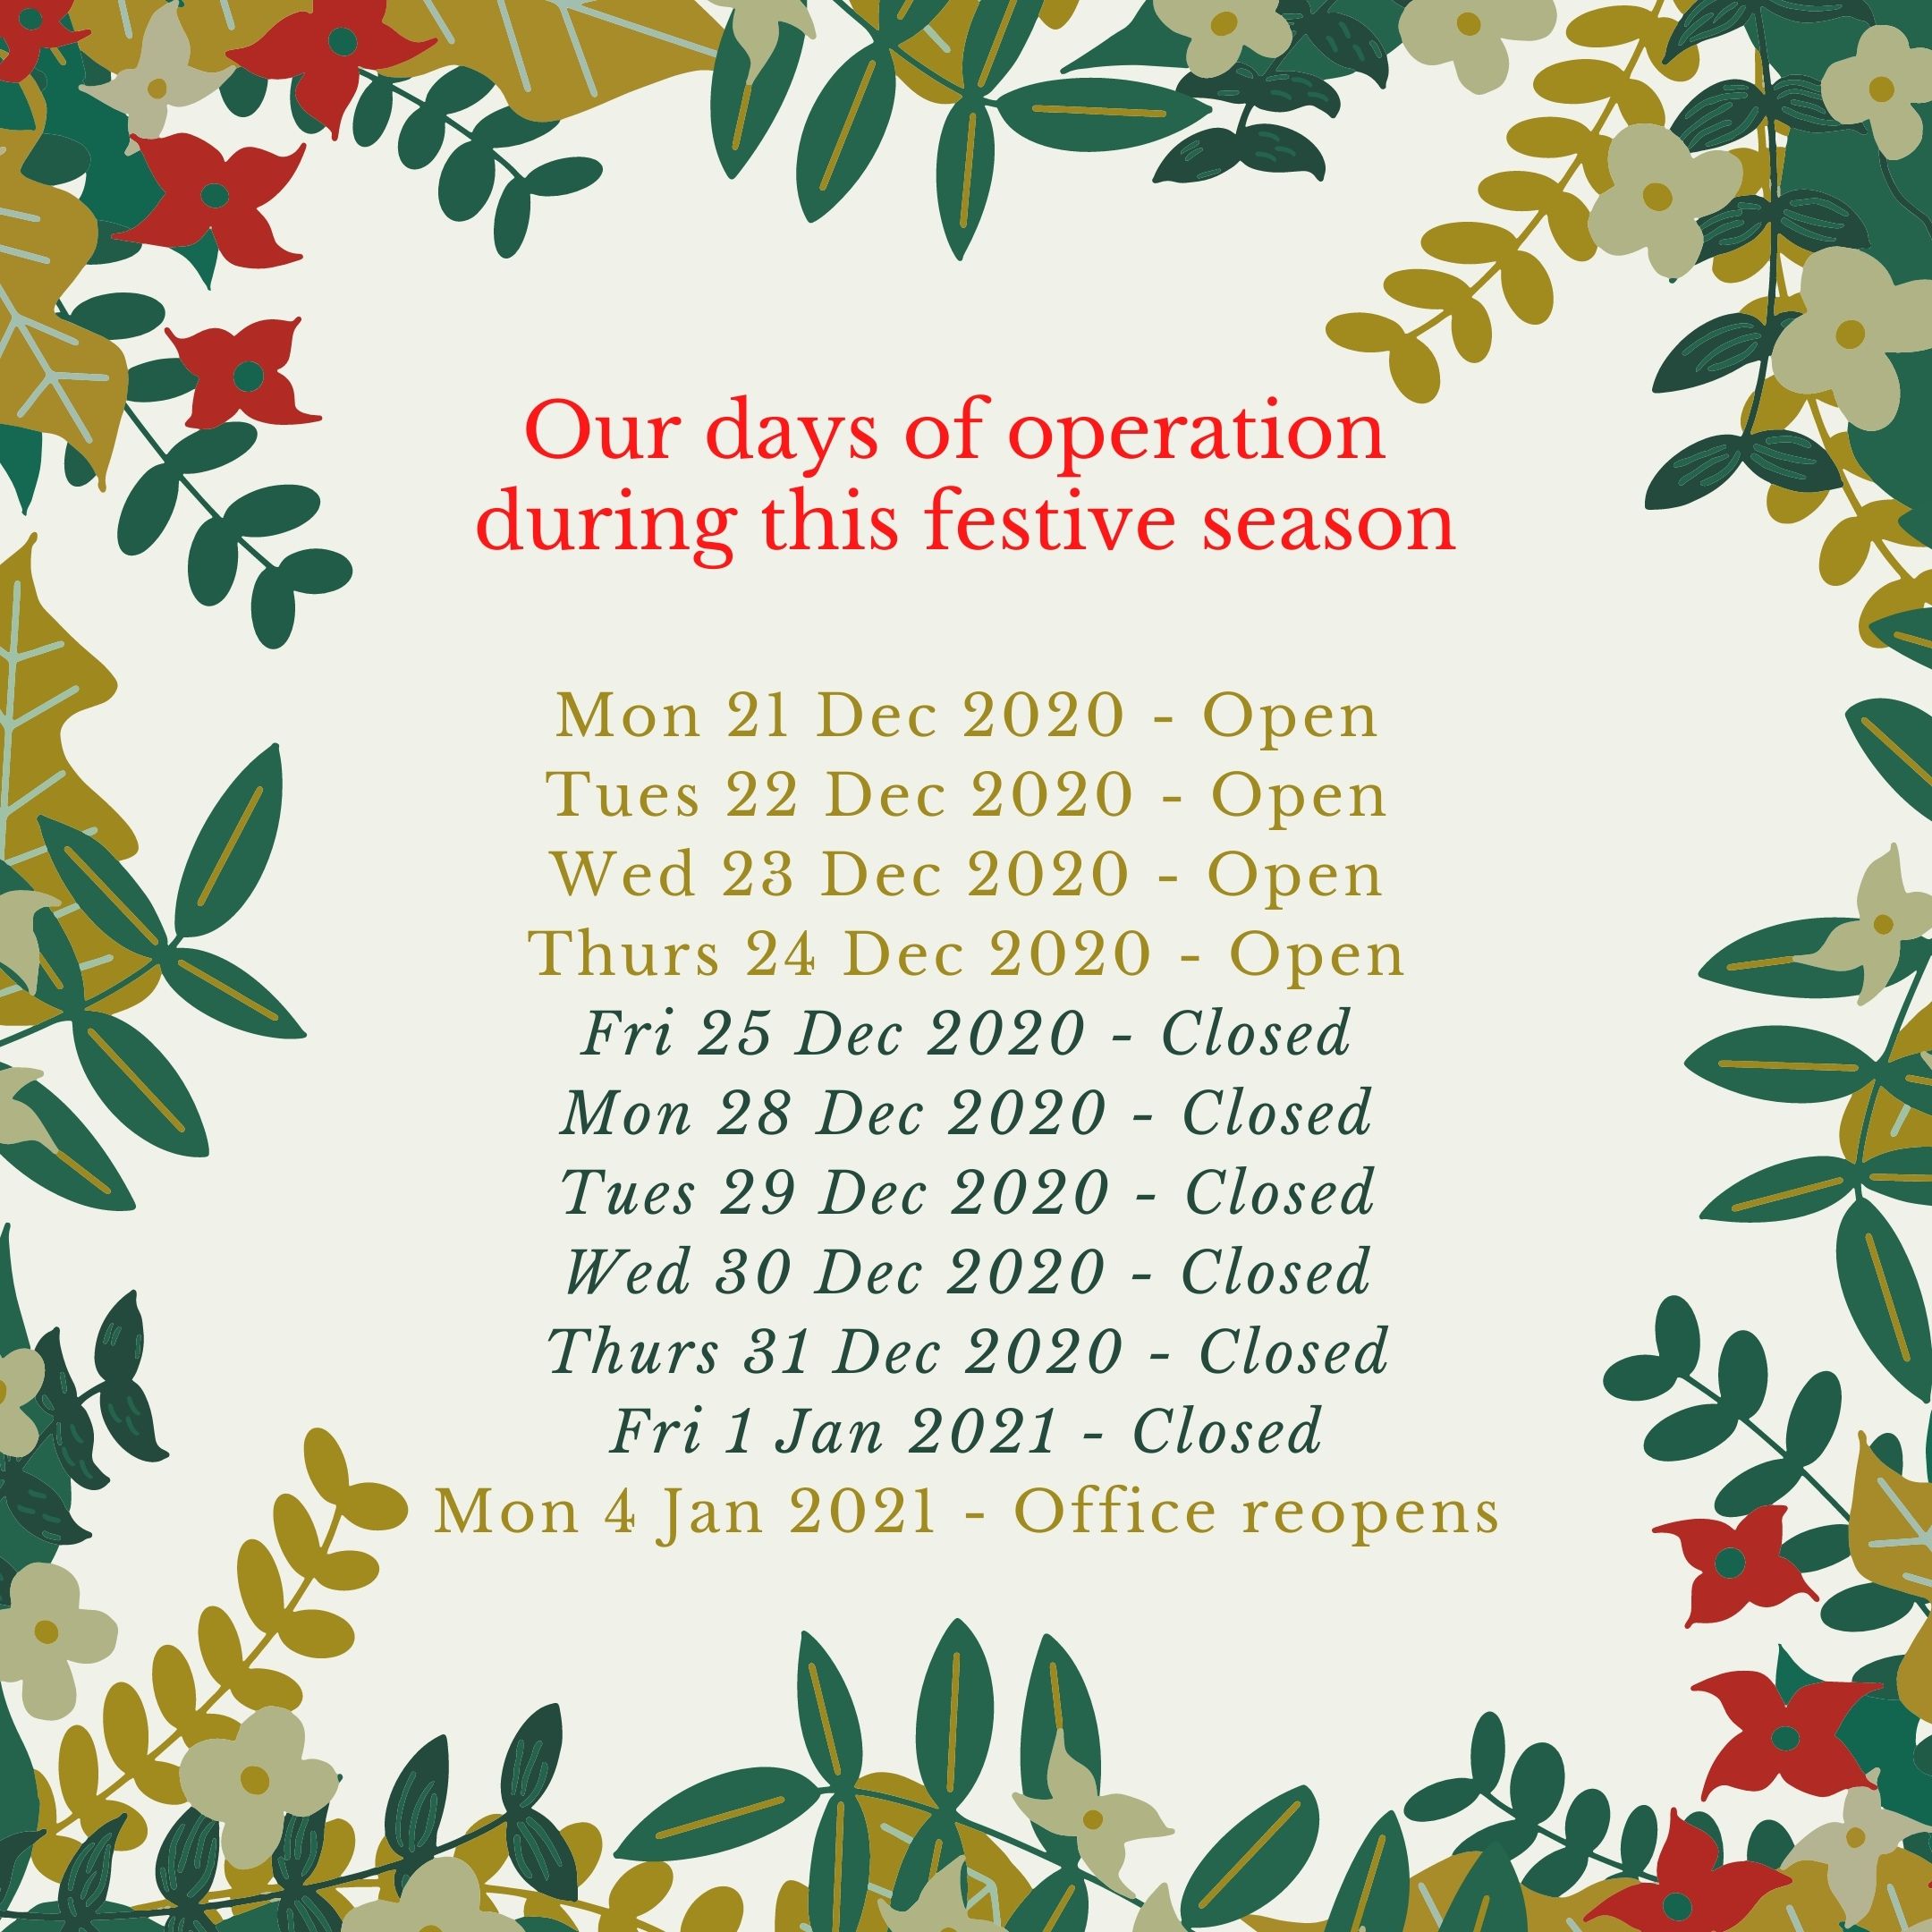 Safe Food festive season closure days of operation